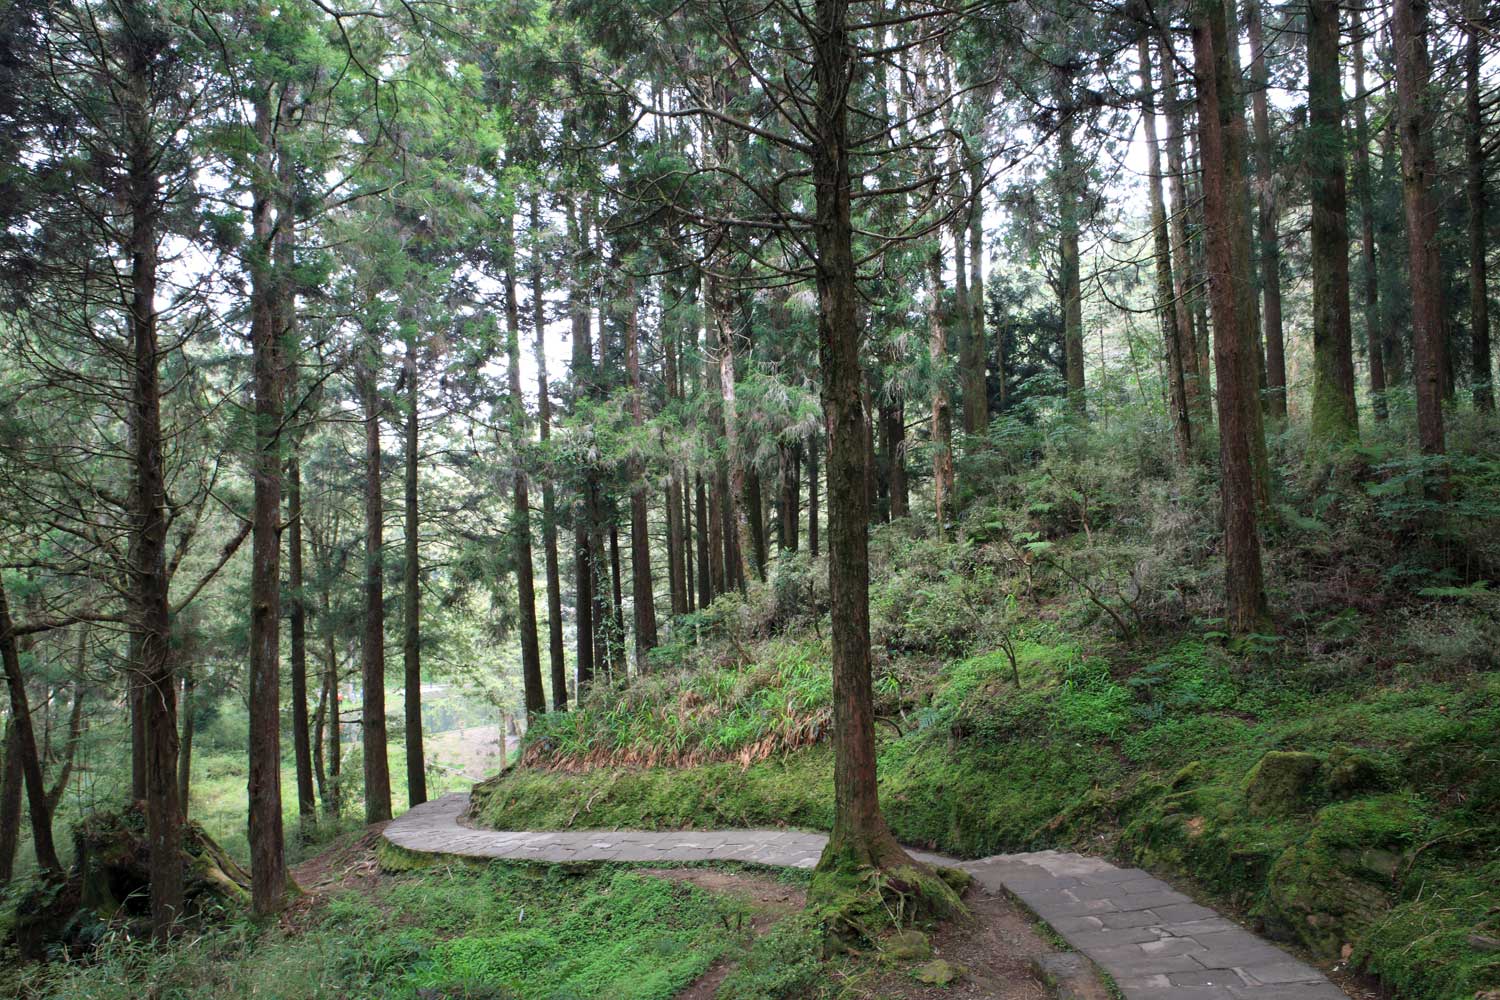 waldorf blog write to read forest scene